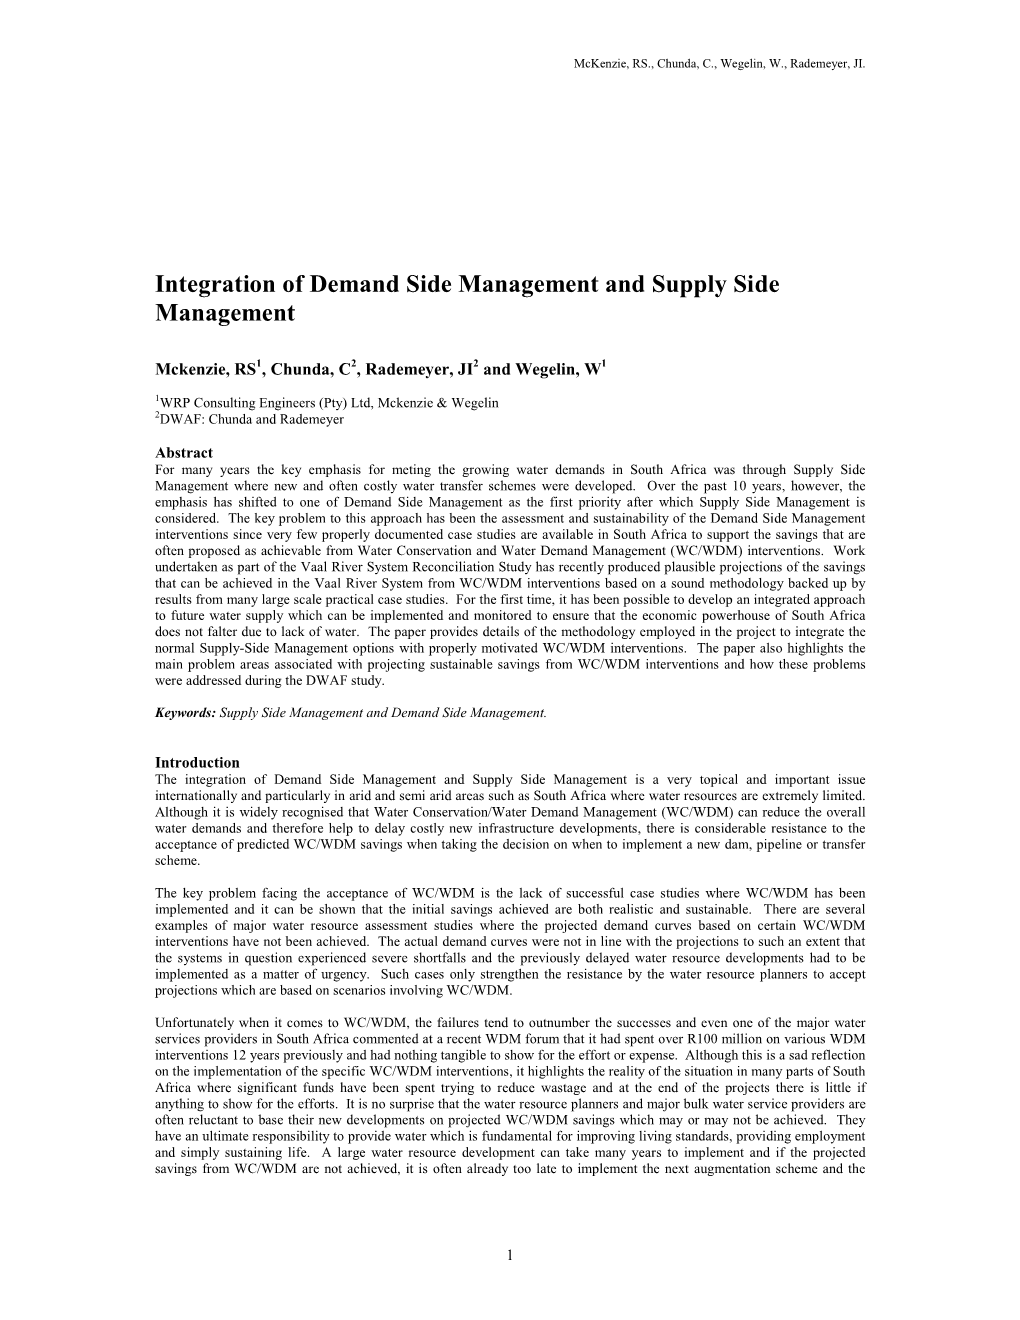 Integration of Demand Side Management and Supply Side Management